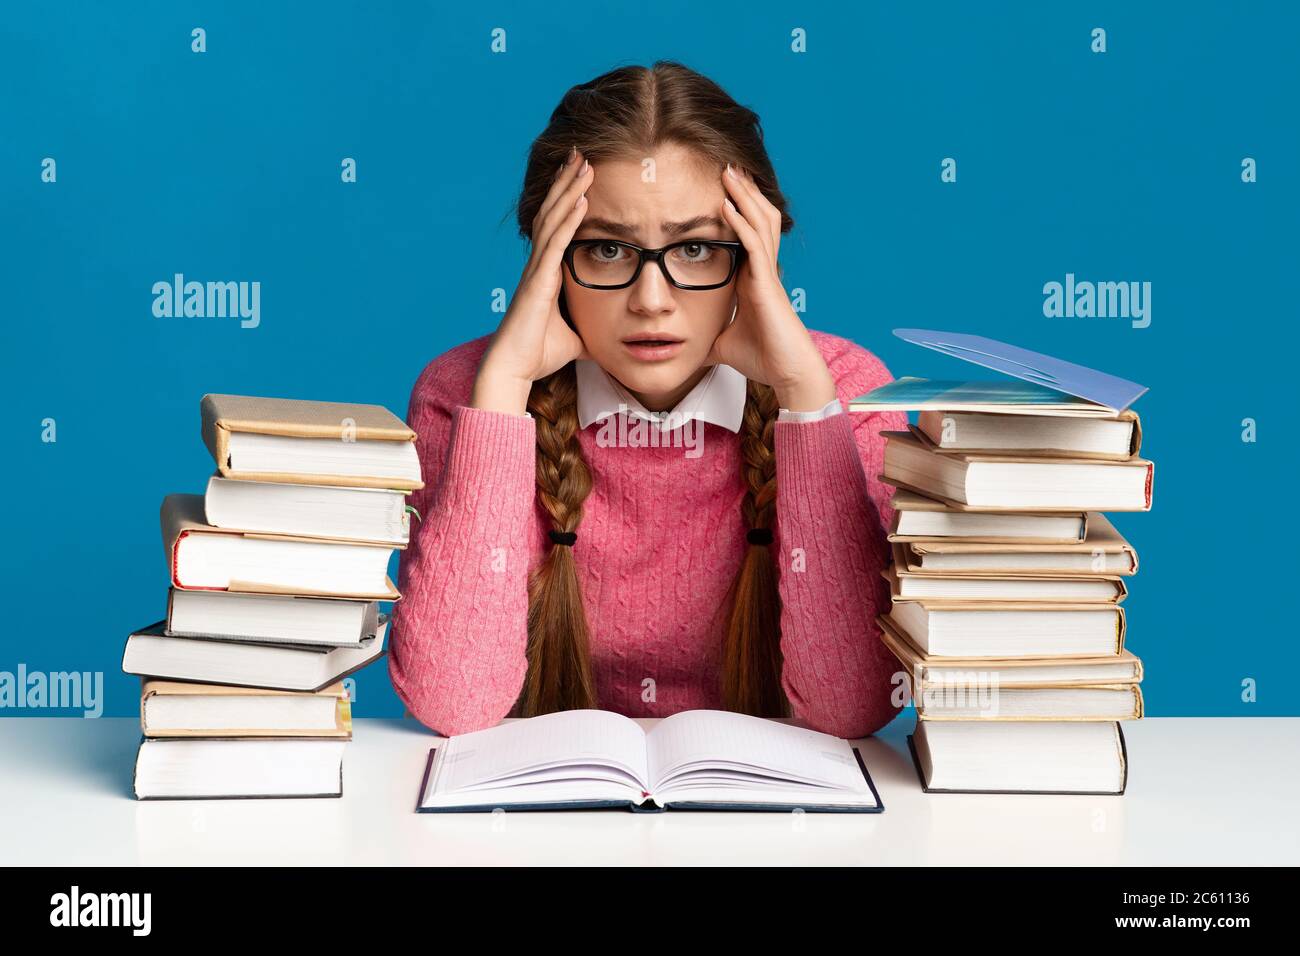 Exam preparation. Teen girl holding head among books Stock Photo